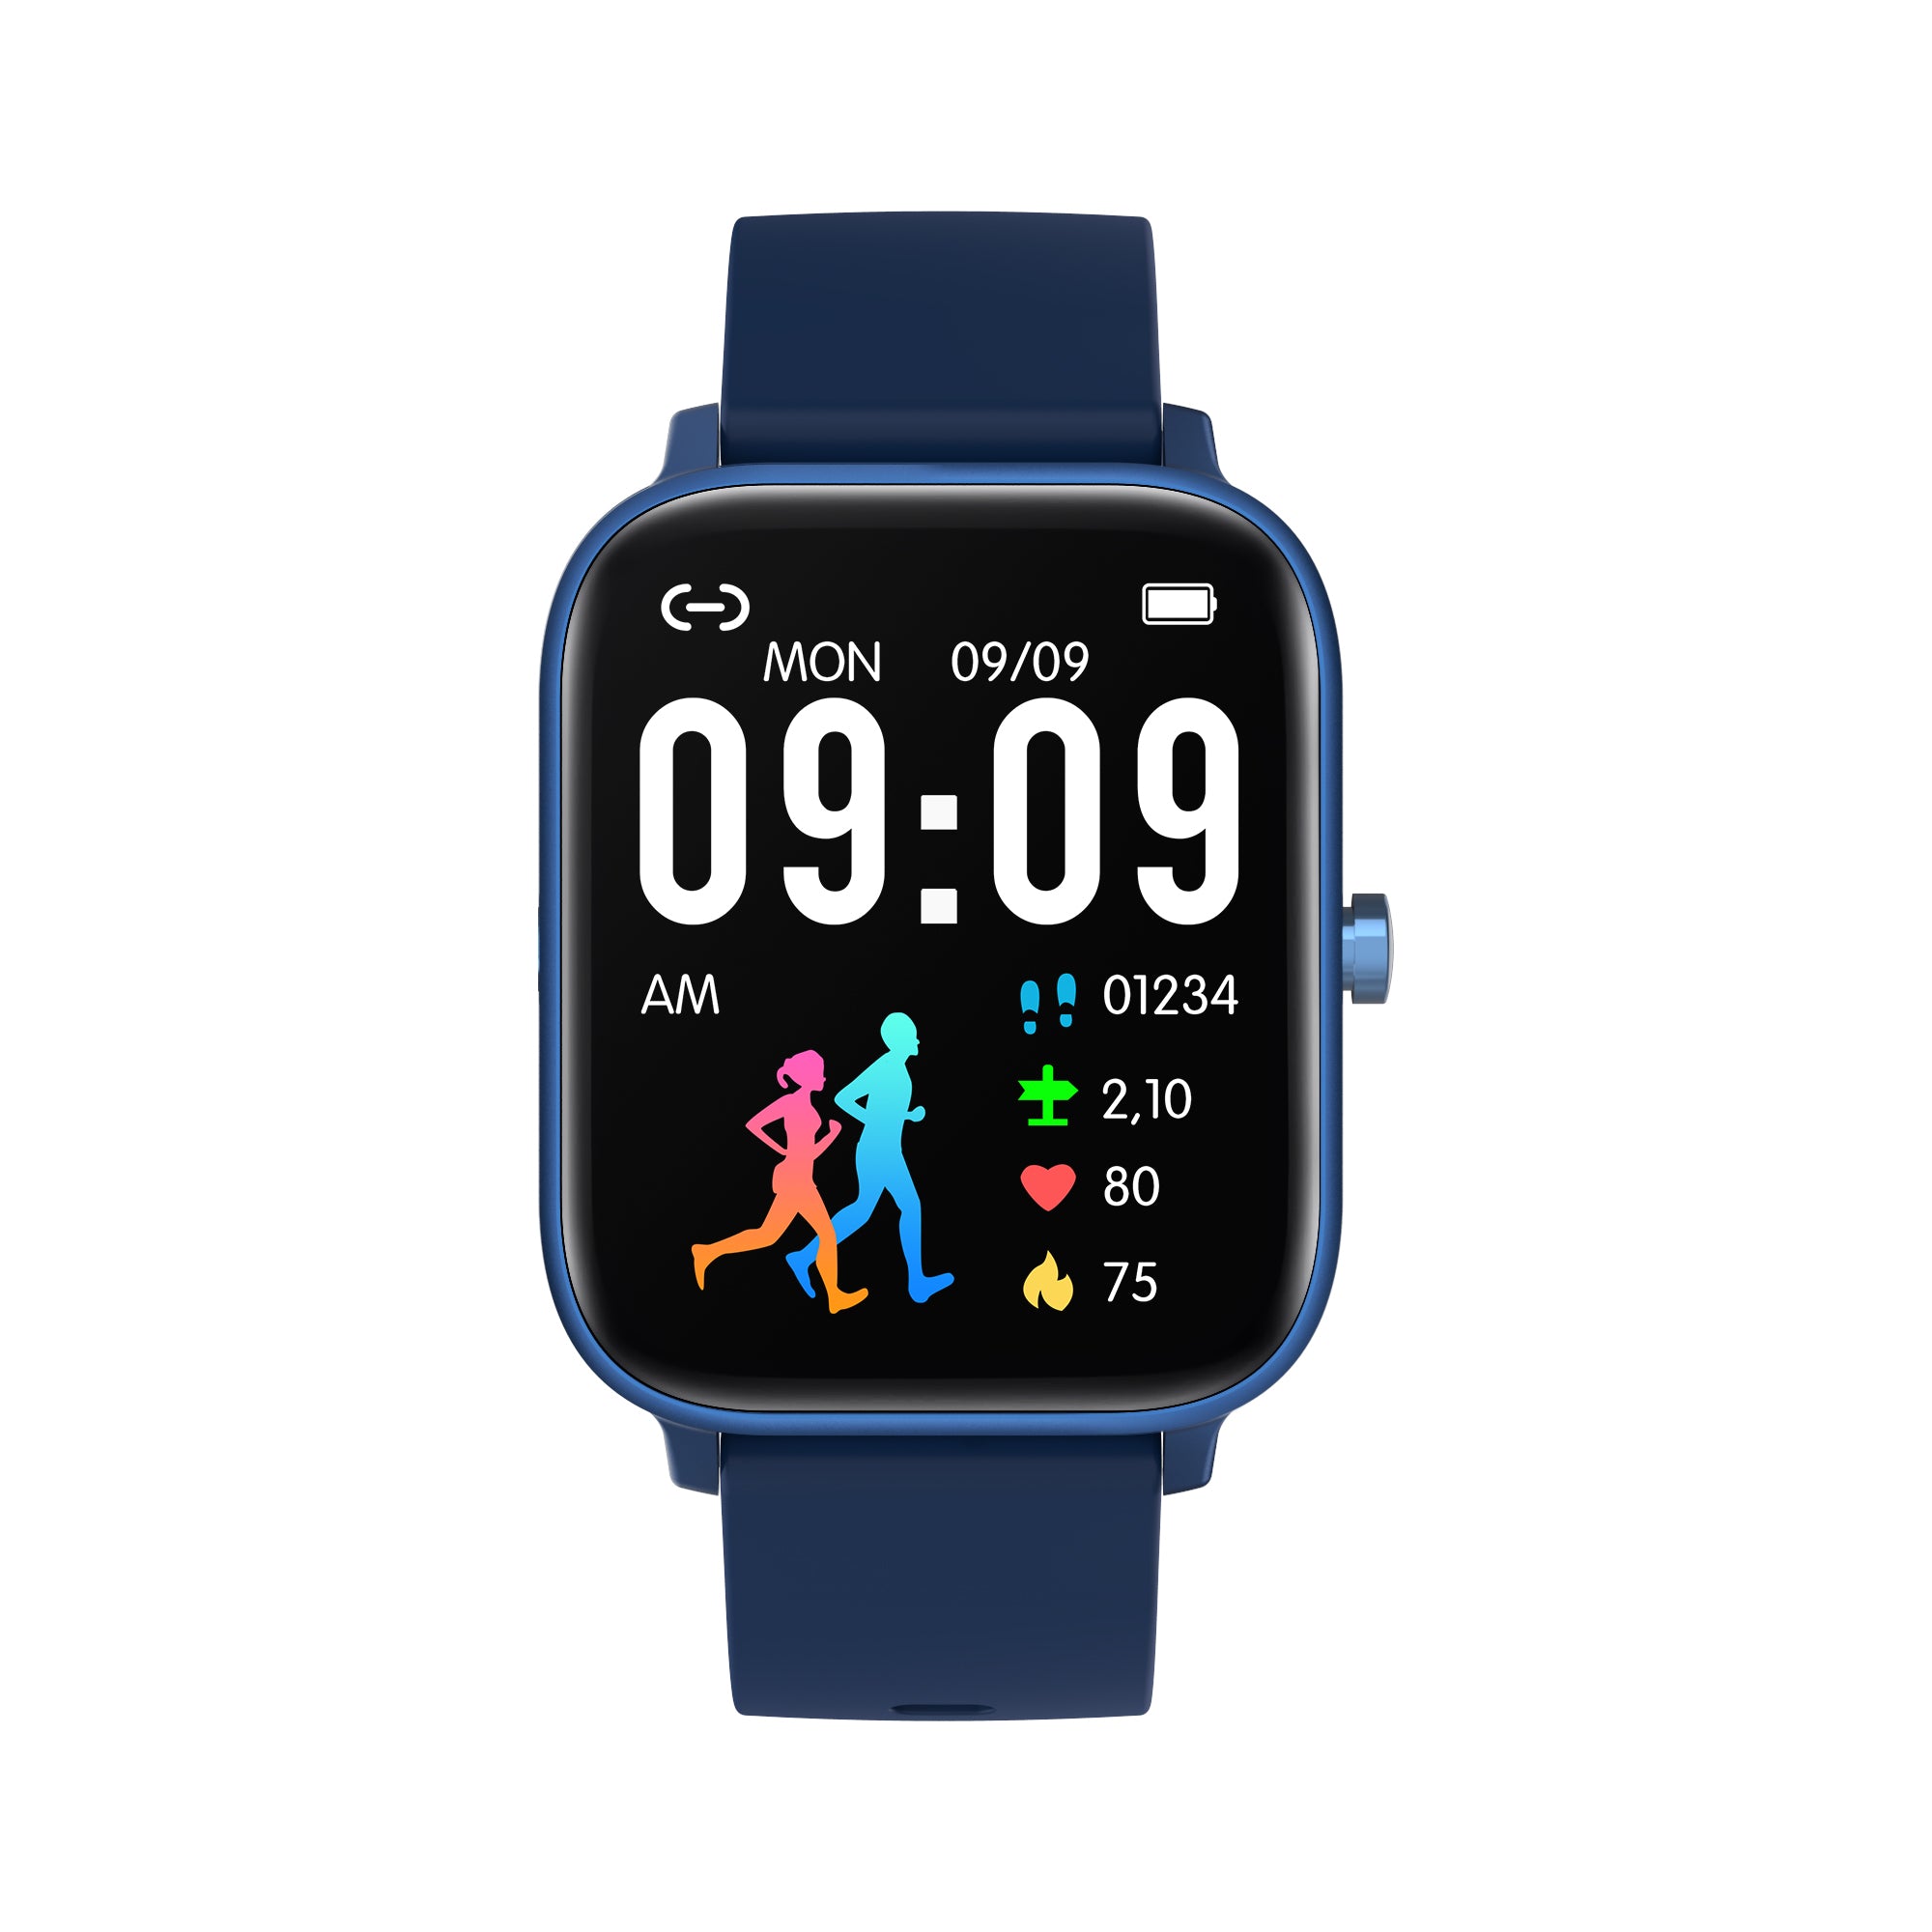 BlazeFit Smart watch with 1.69" HD Display, Bluetooth 5.1, Smart Calling, IP67 Splash Proof, Heart & SpO2 Monitoring, Multi Sports Modes, 5 Days Battery